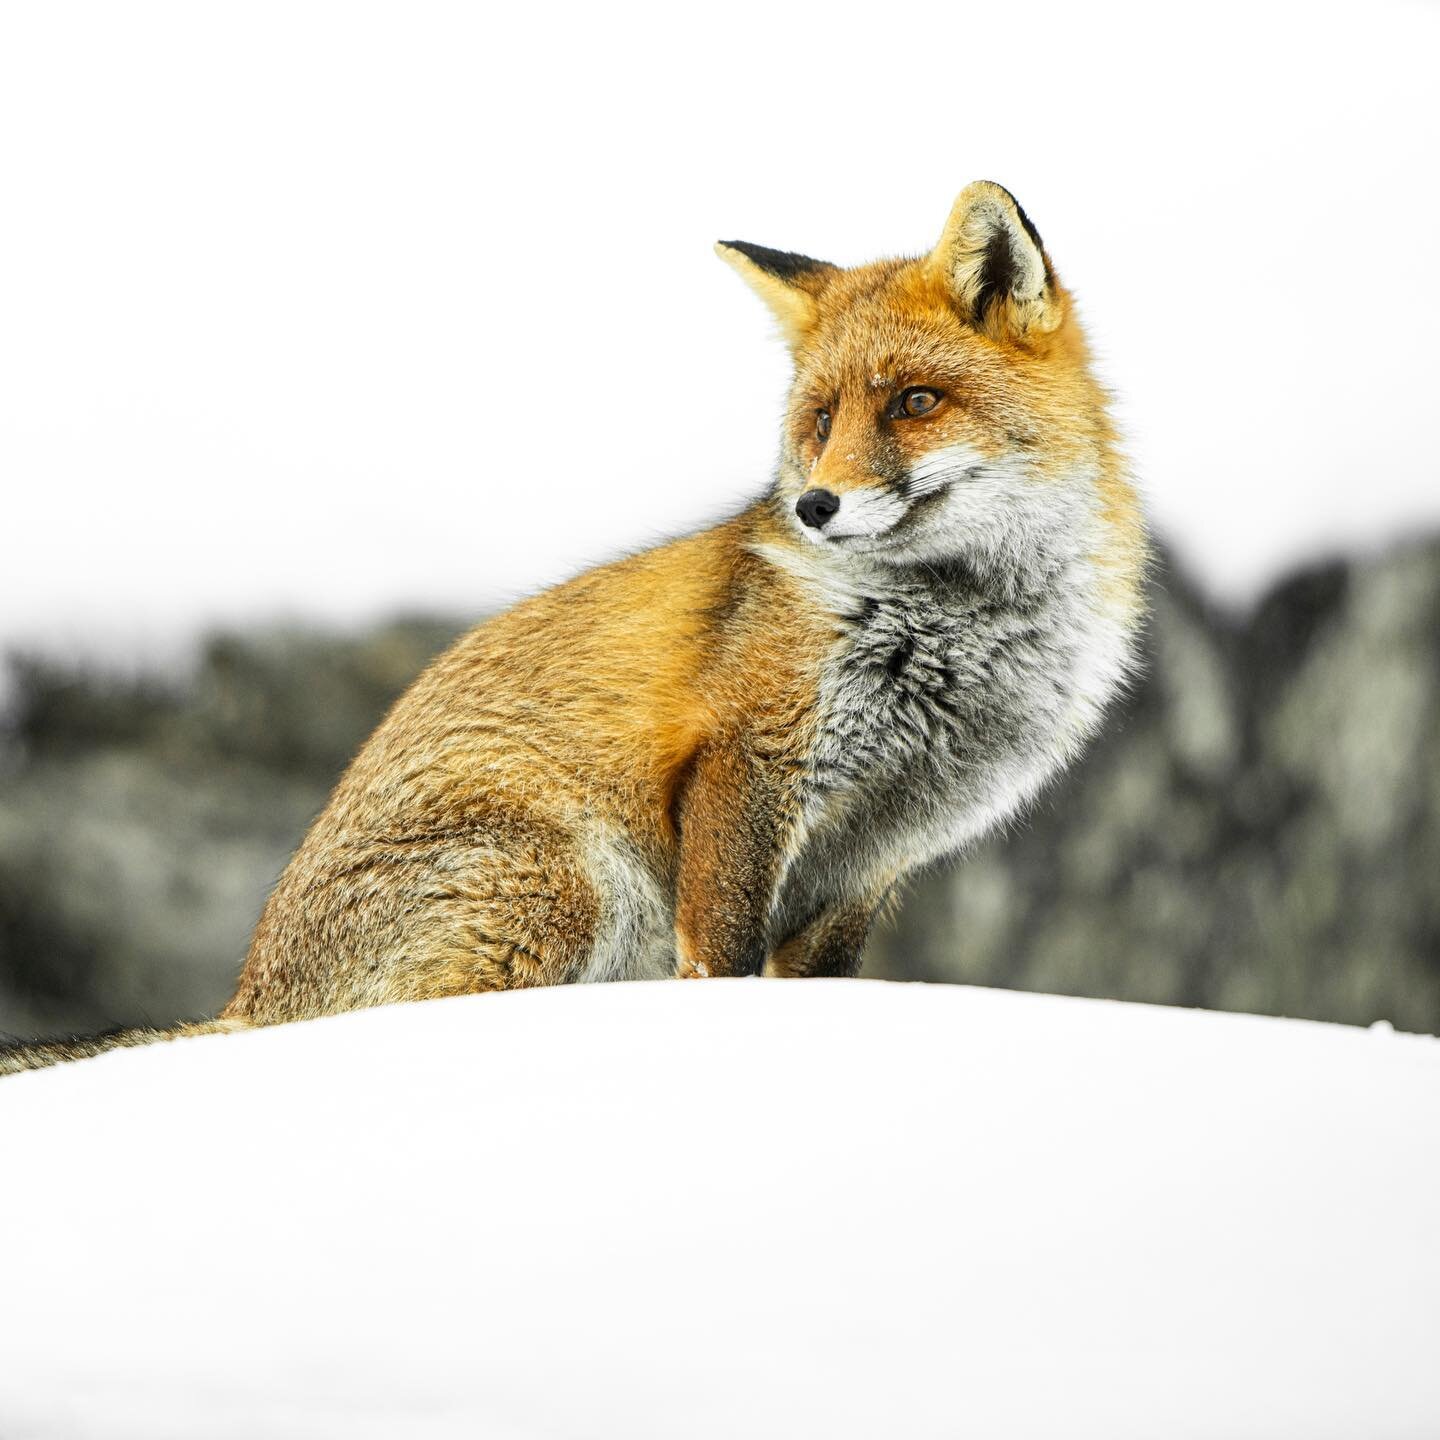 Red fox in the snow, some month ago at Gran Paradiso National Park.⁠⁠
.⁠⁠
.⁠⁠
#animalphotos⁠⁠
#animalphotography⁠⁠
#animalsofinstagram⁠⁠
#animalsultans⁠⁠
#birdsofinstagram⁠⁠
#birdphotography⁠⁠
#discovertheworld⁠⁠
#exclusive_animals⁠⁠
#explore_wildlif